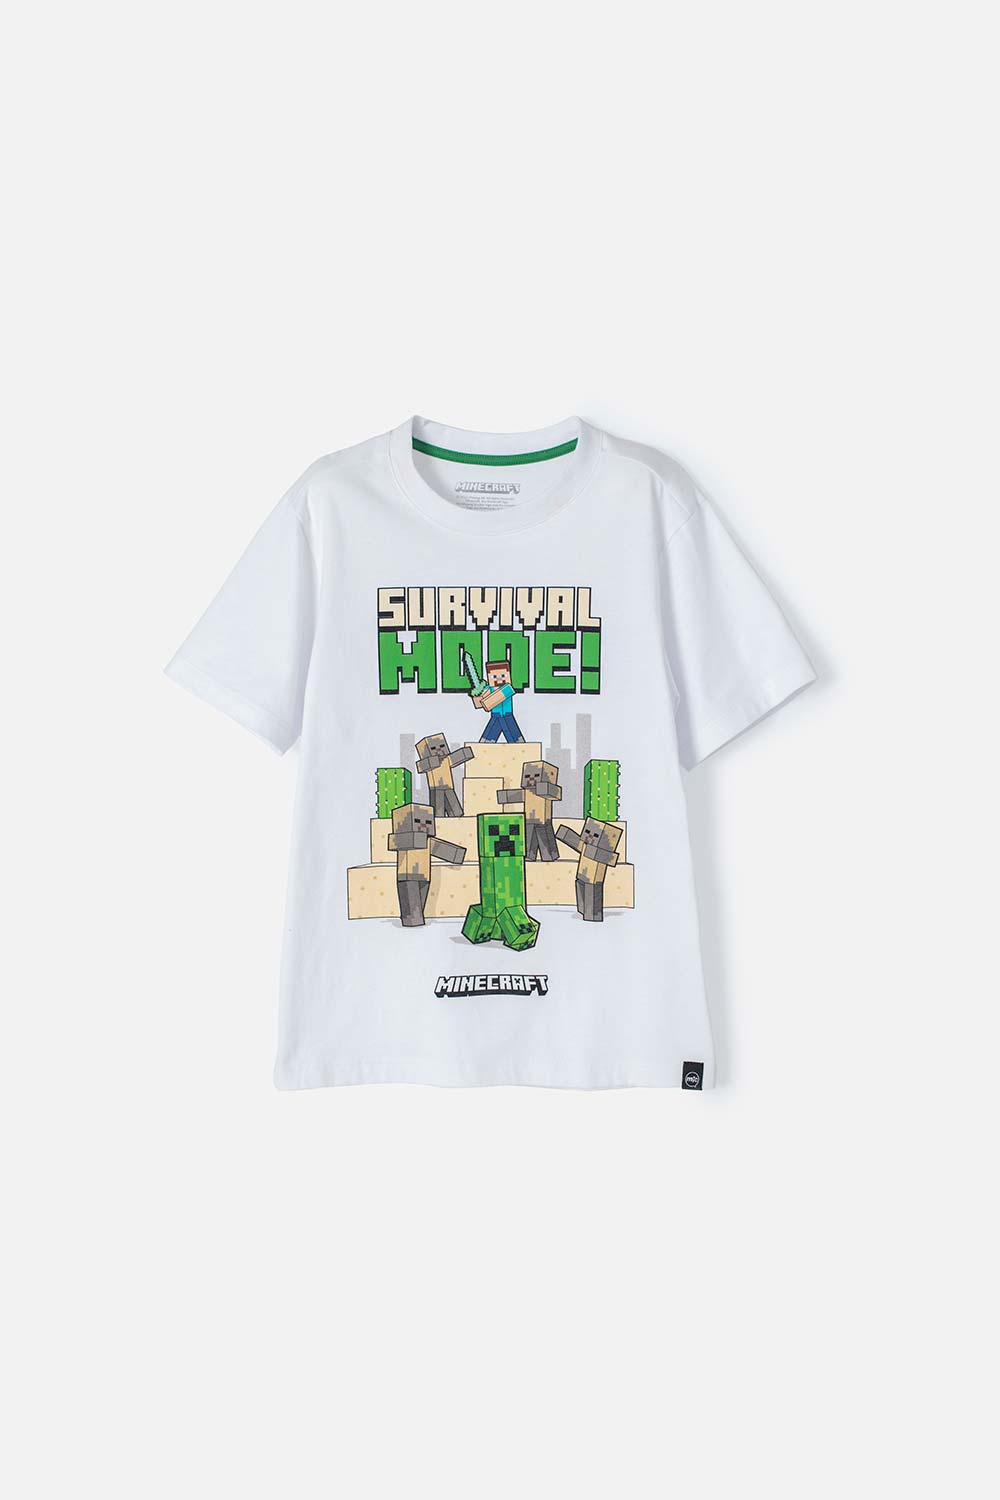 Camiseta de Minecraft blanca manga corta para niño 6-0